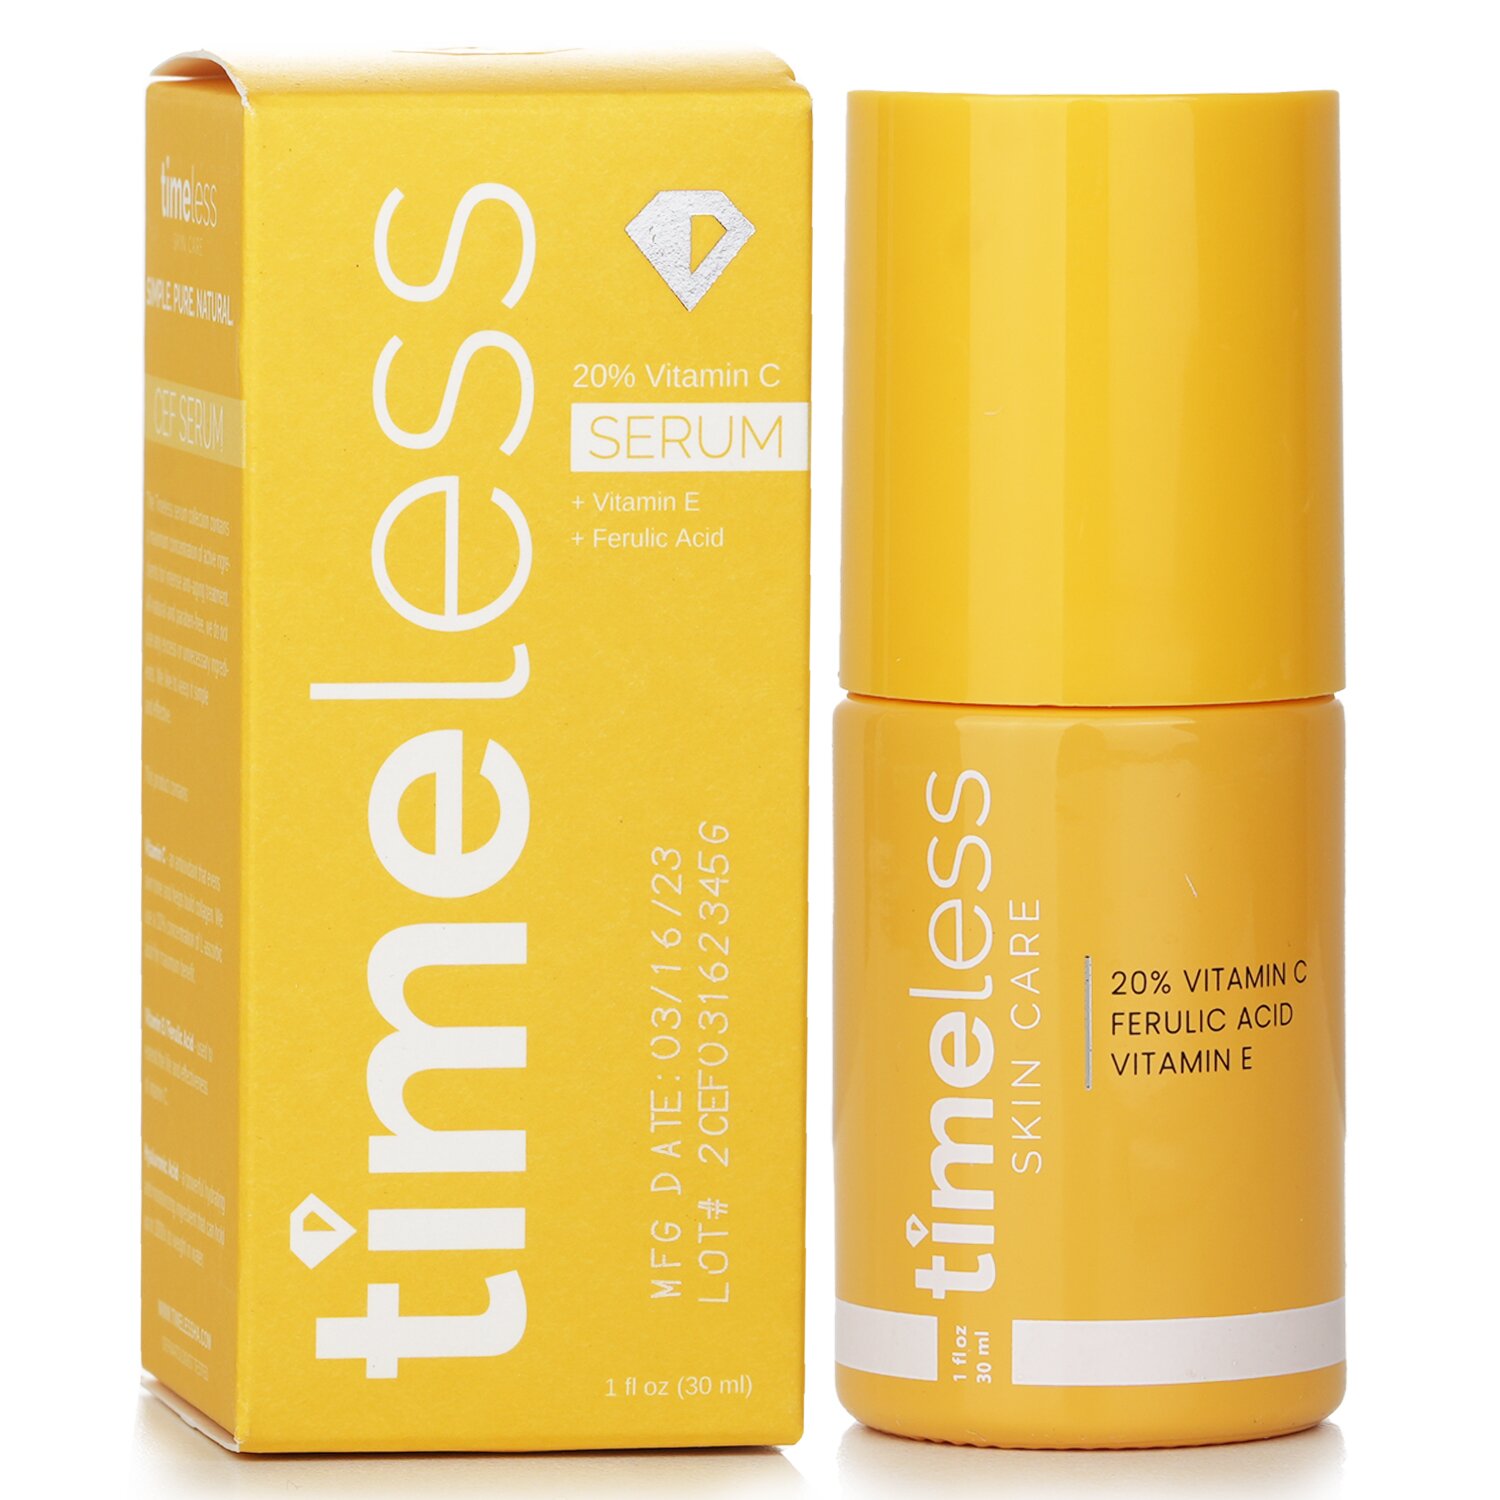 Timeless Skin Care 20% Vitamin C Serum + Vitamin E + Ferulic Acid 30ml/1oz